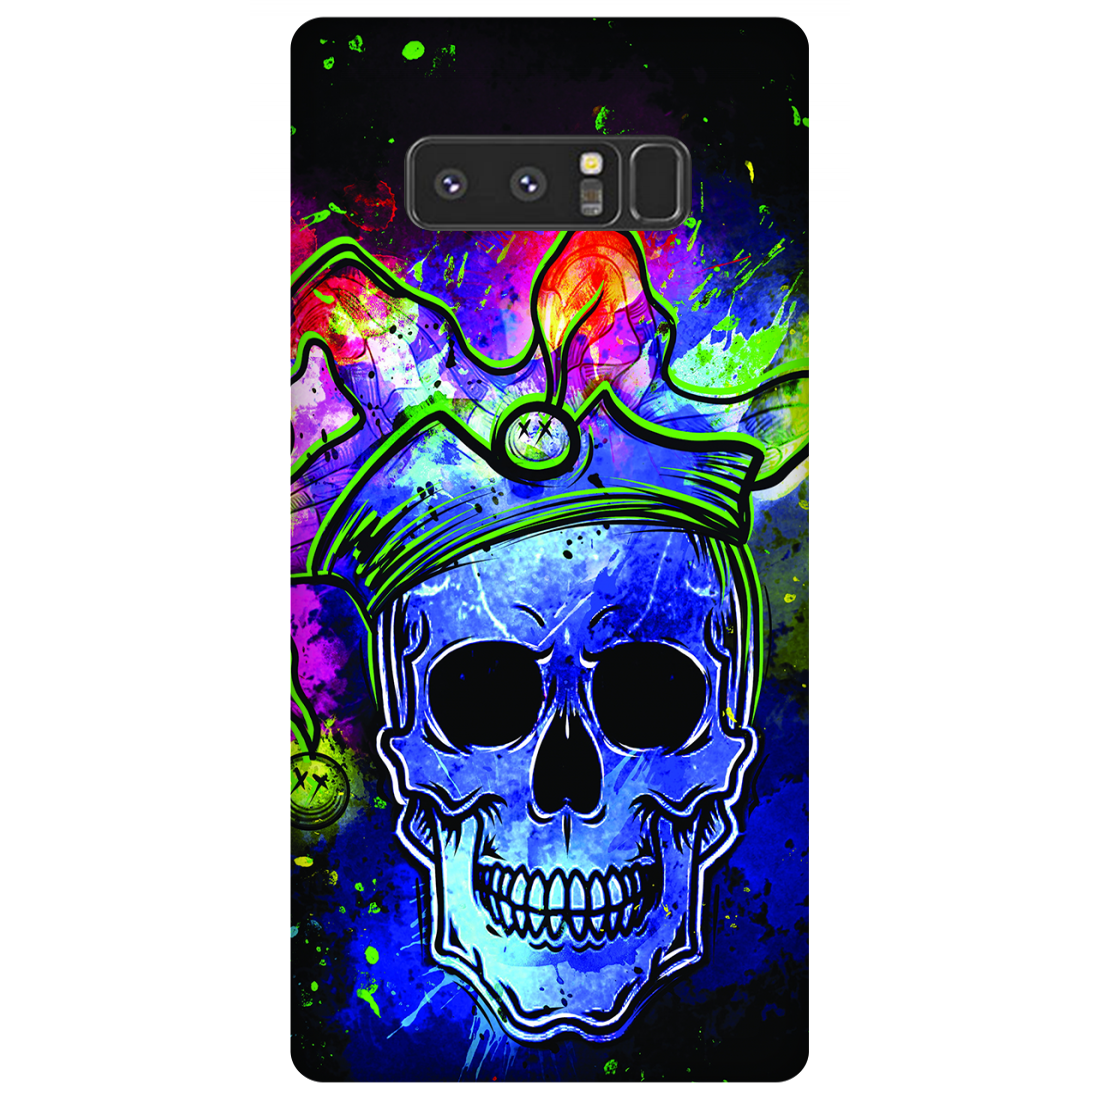 Psychedelic Royal Skull Case Samsung Galaxy Note 8